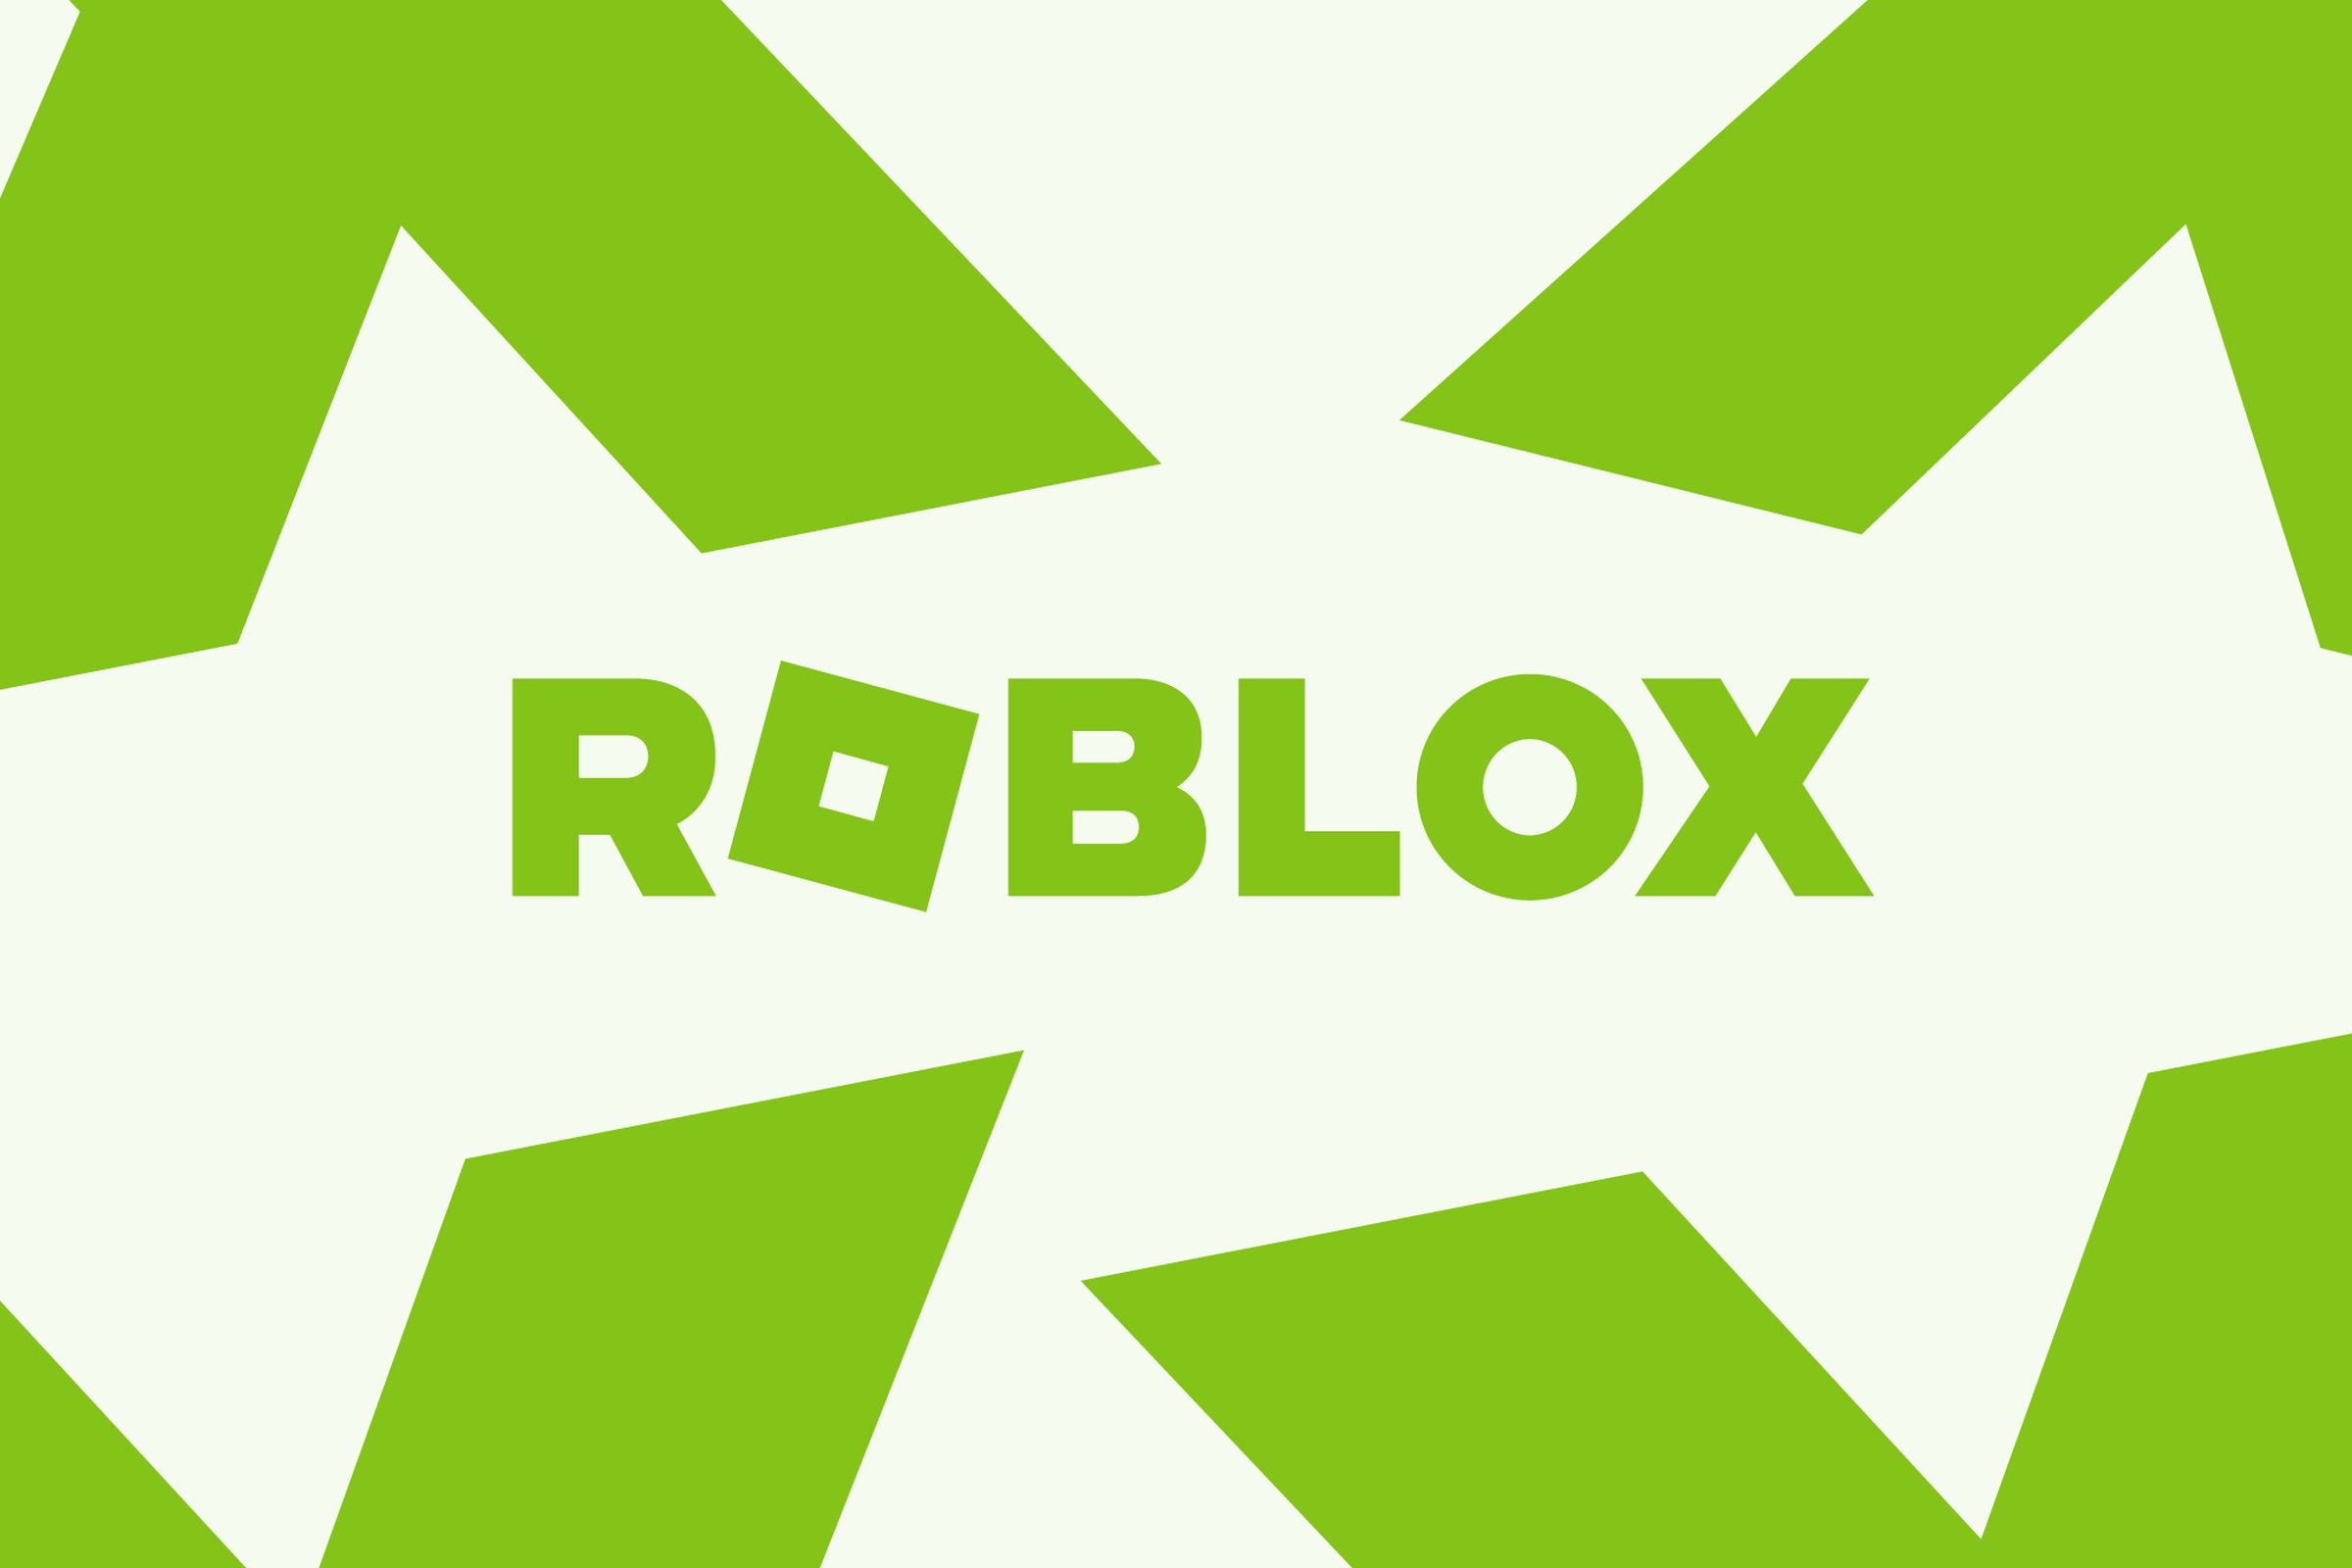 Illustration of the Roblox wordmark logo in green